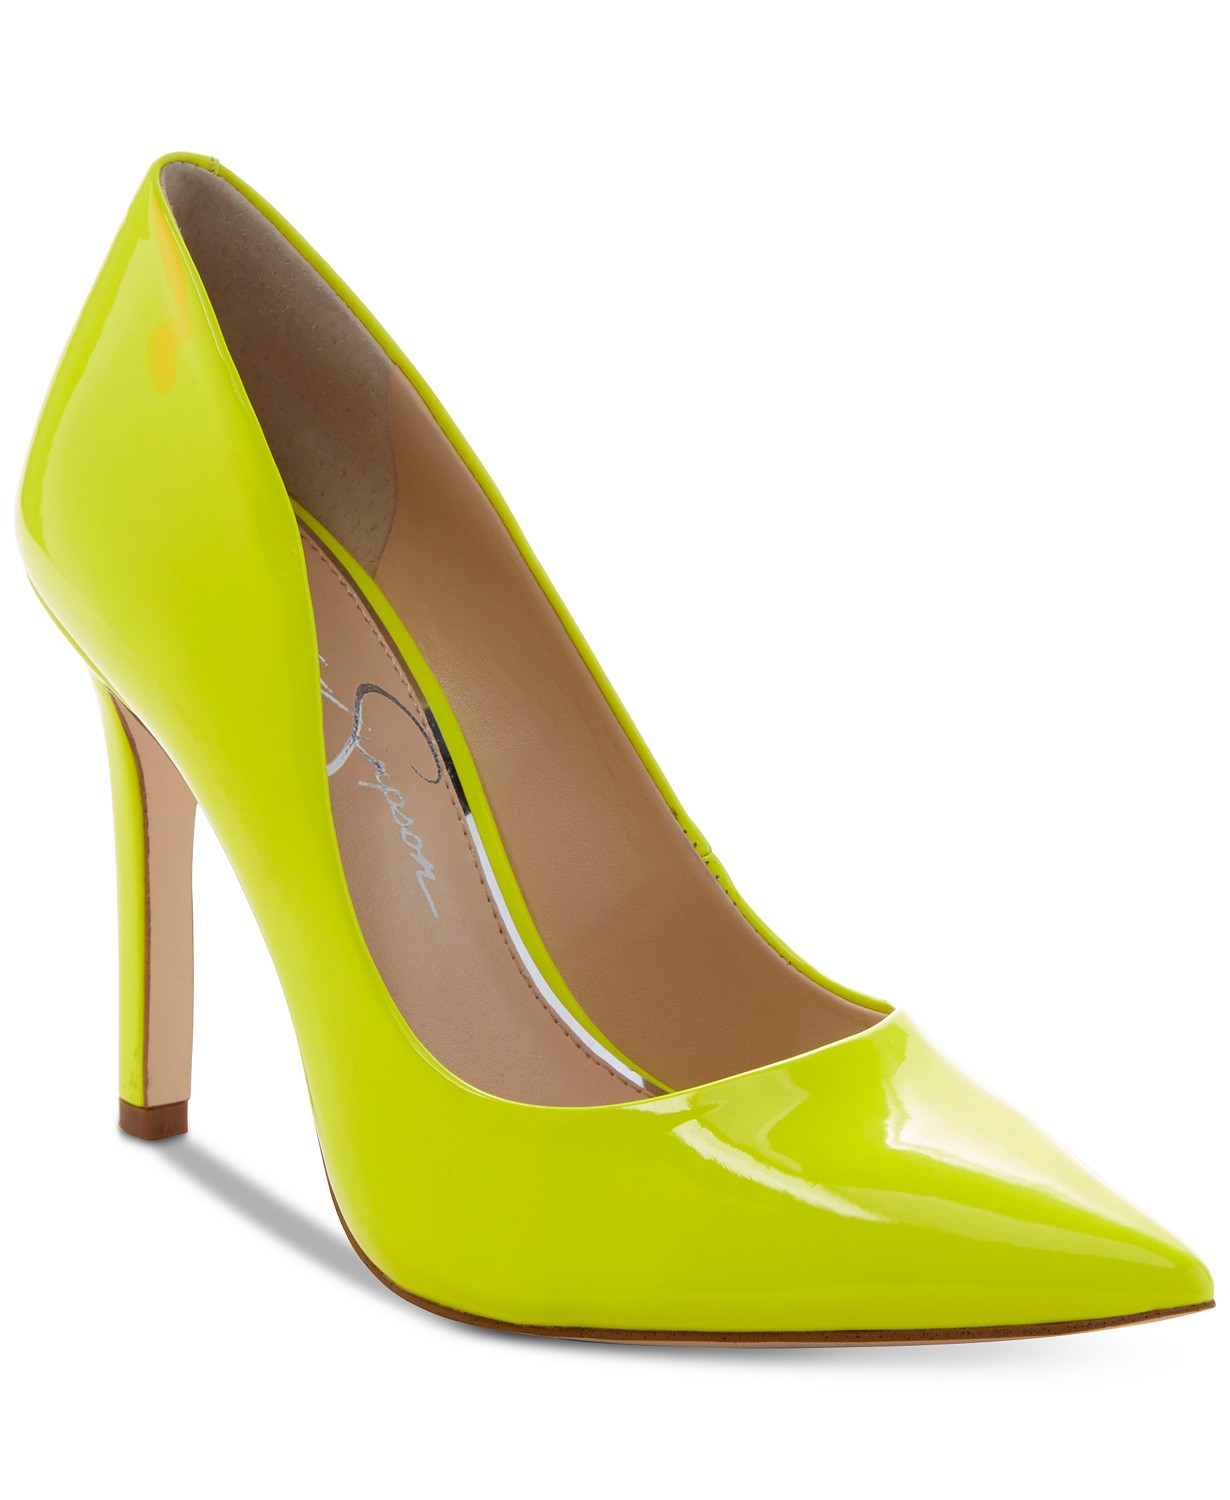 neon yellow shoes heels